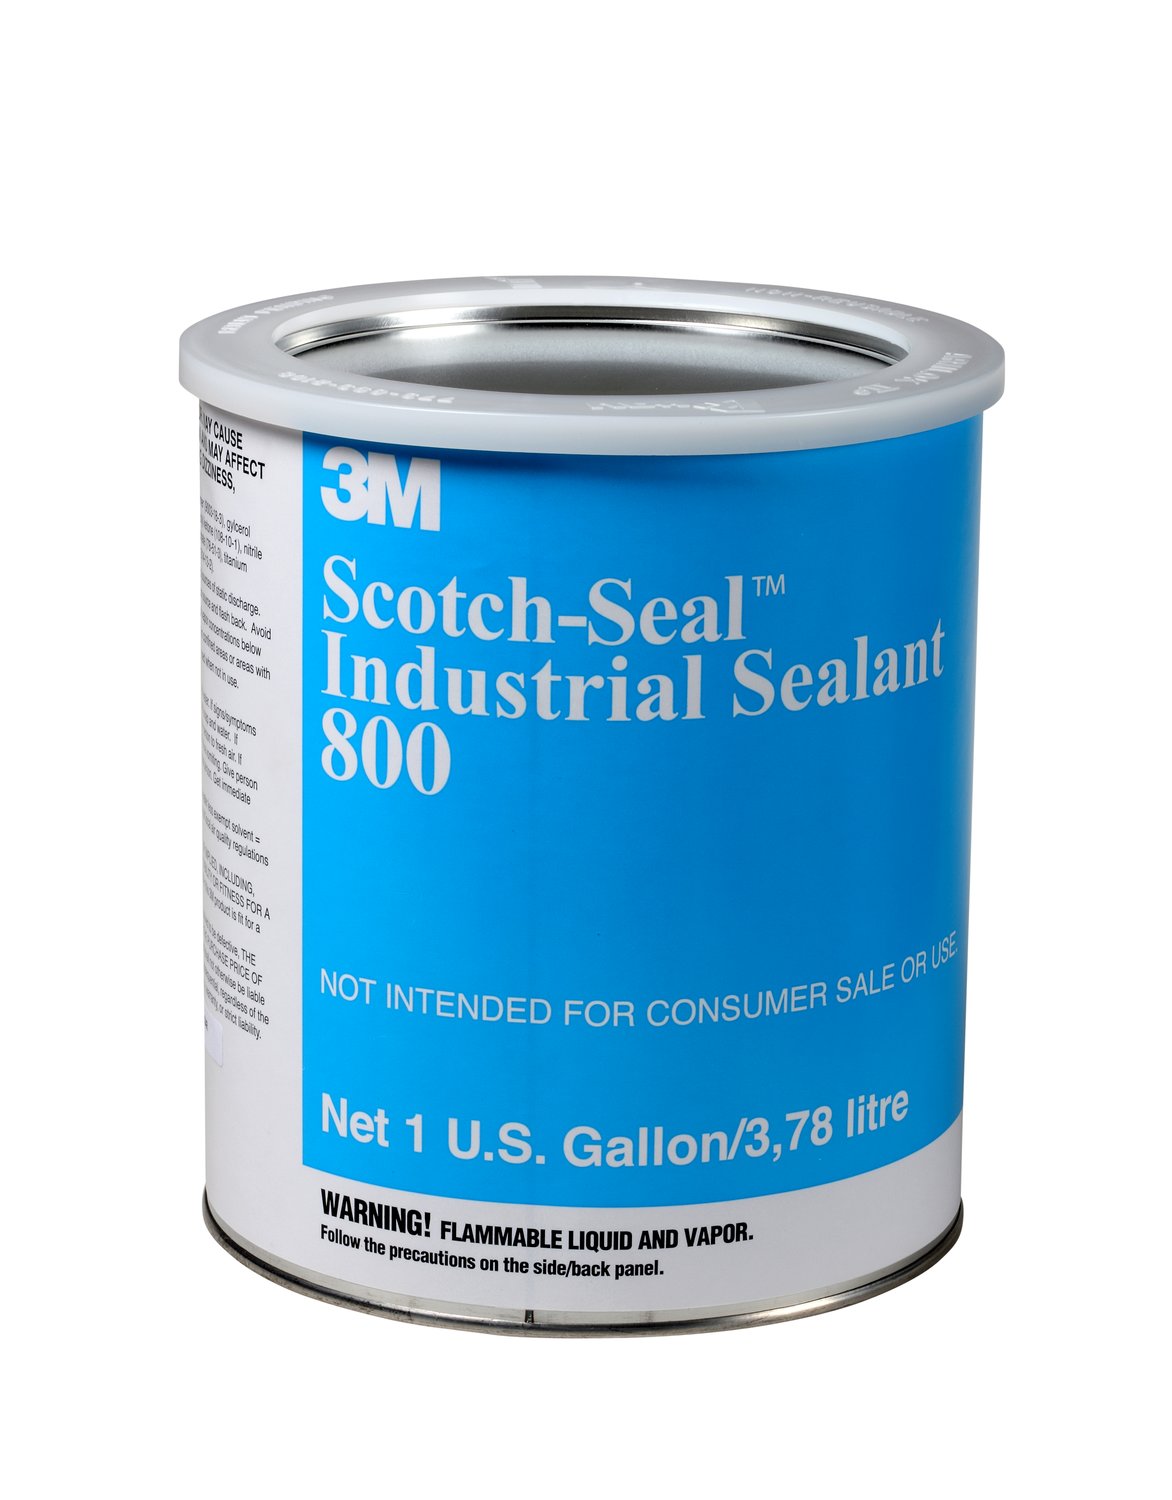 7000000793 - 3M Scotch-Seal Industrial Sealant 800, Reddish Brown, 1 Gallon Drum, 4
Can/Case